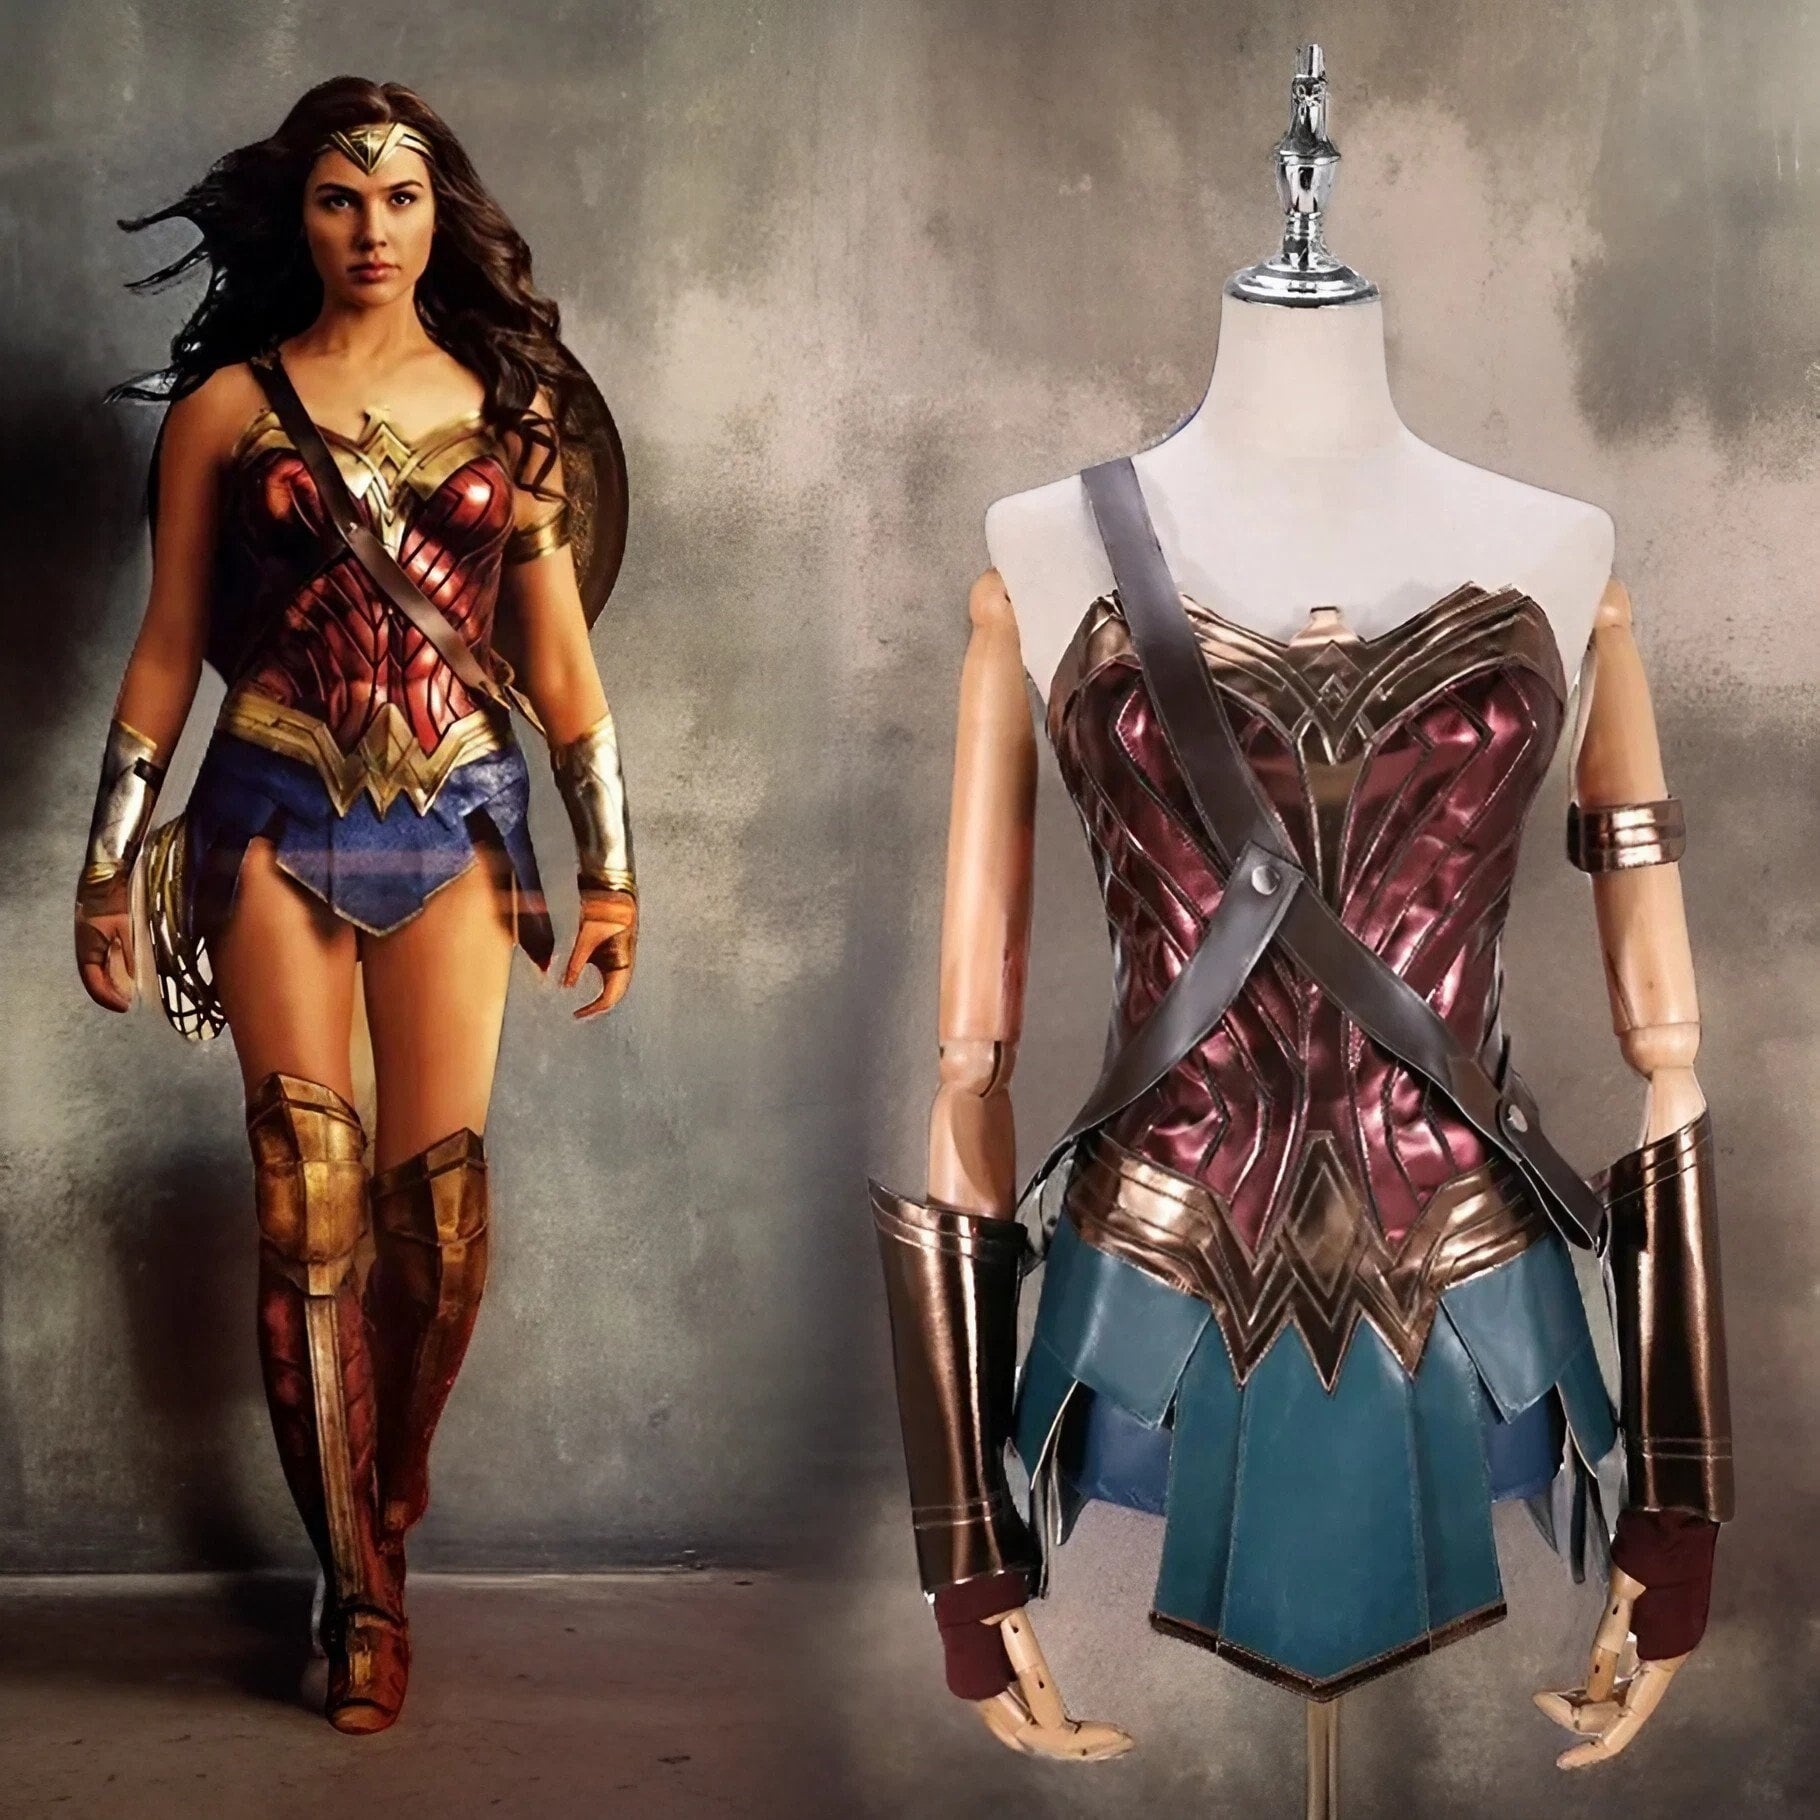 Adult Wonder Woman Costume - DC Originals